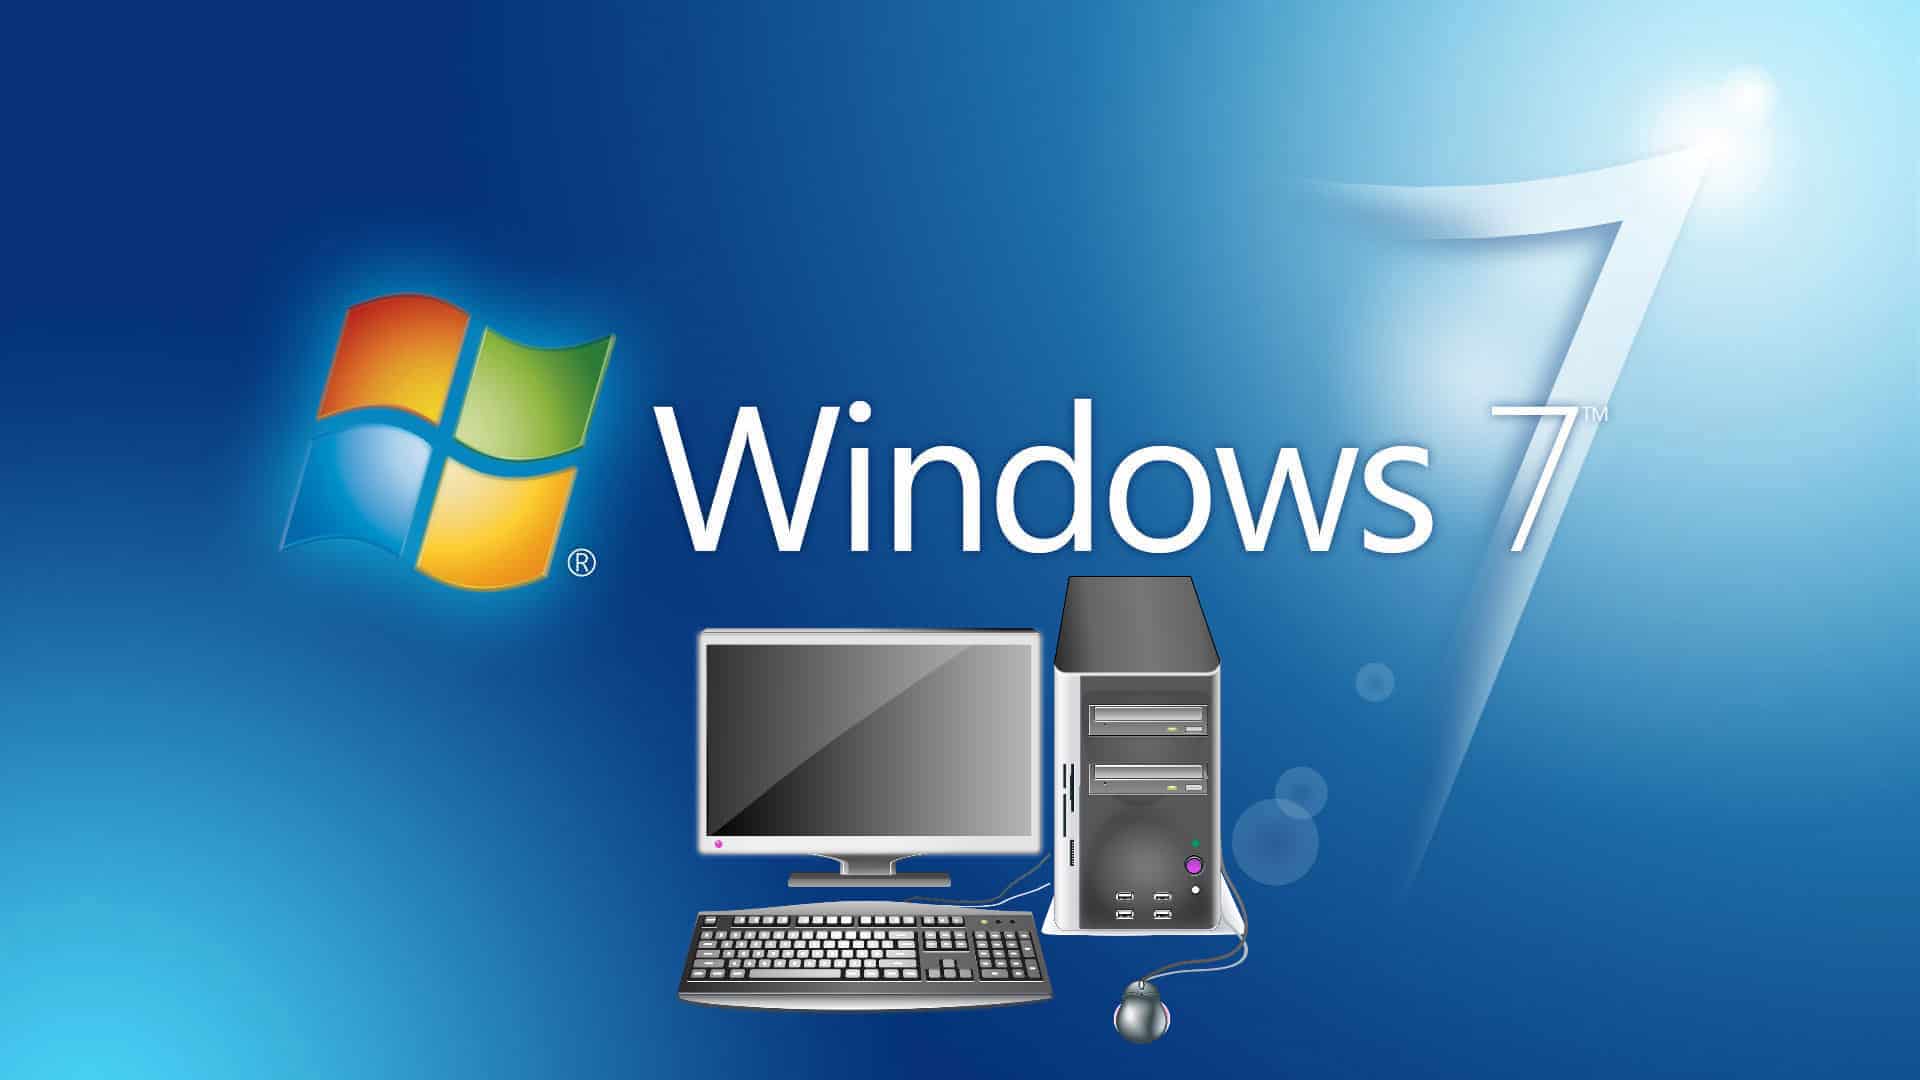 Requisitos para instalar Windows 7